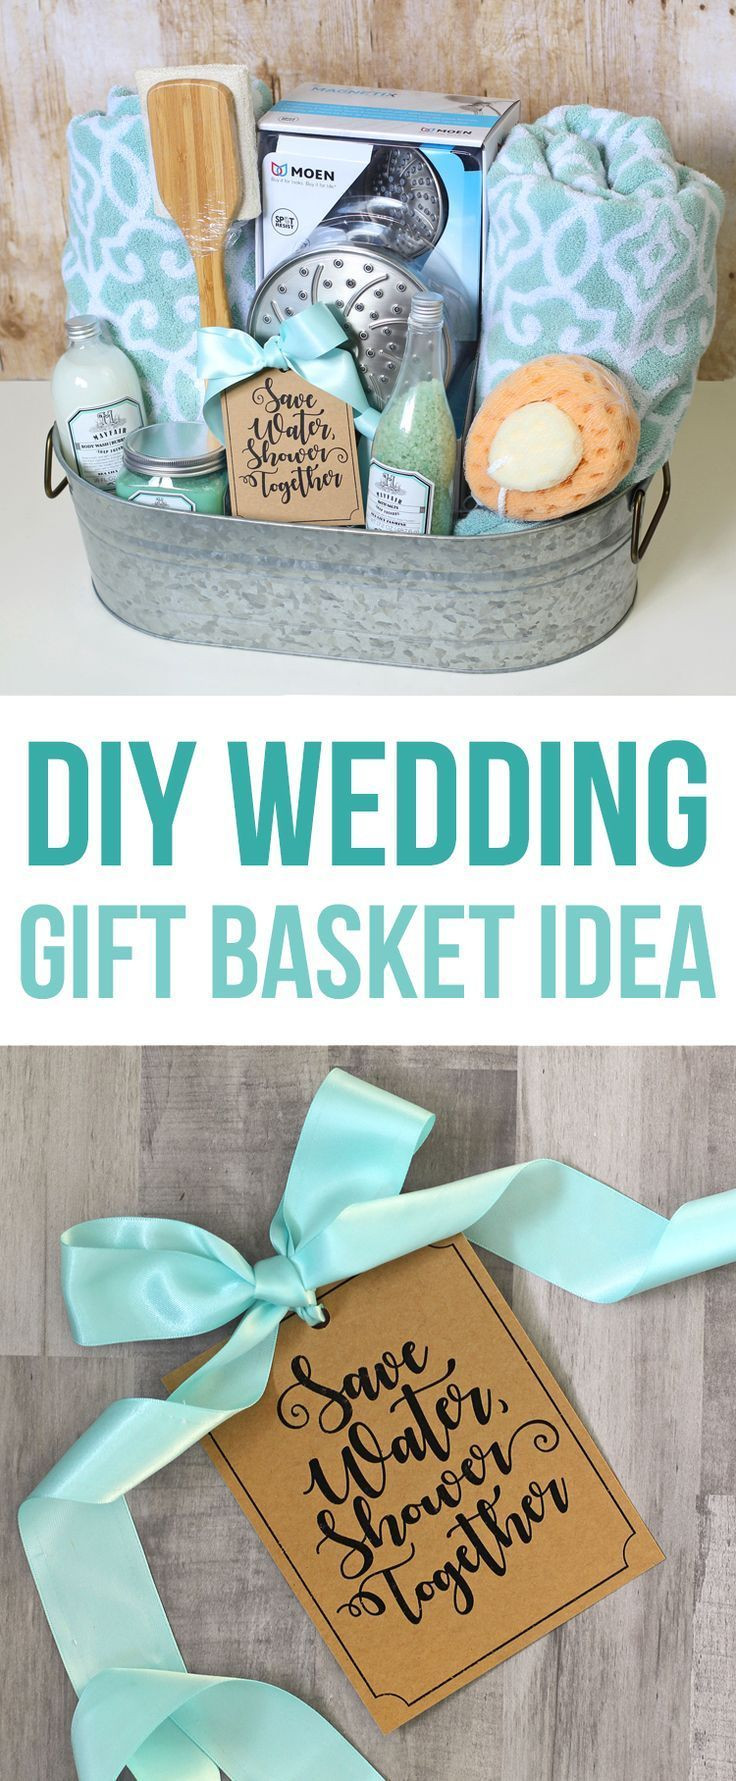 Ideas For Wedding Gift
 Shower Themed DIY Wedding Gift Basket Idea